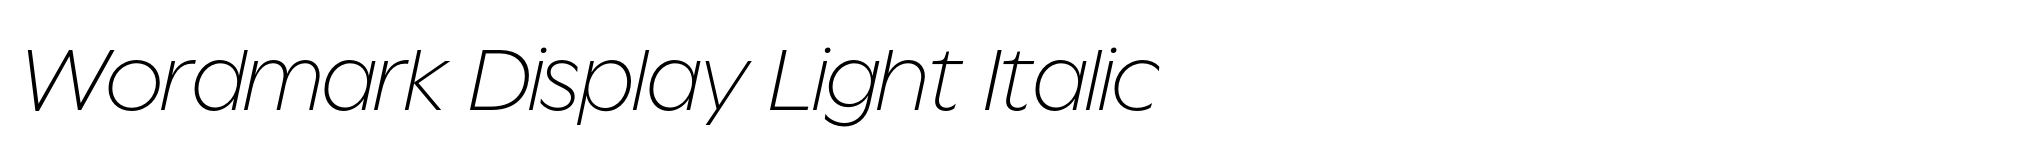 Wordmark Display Light Italic image